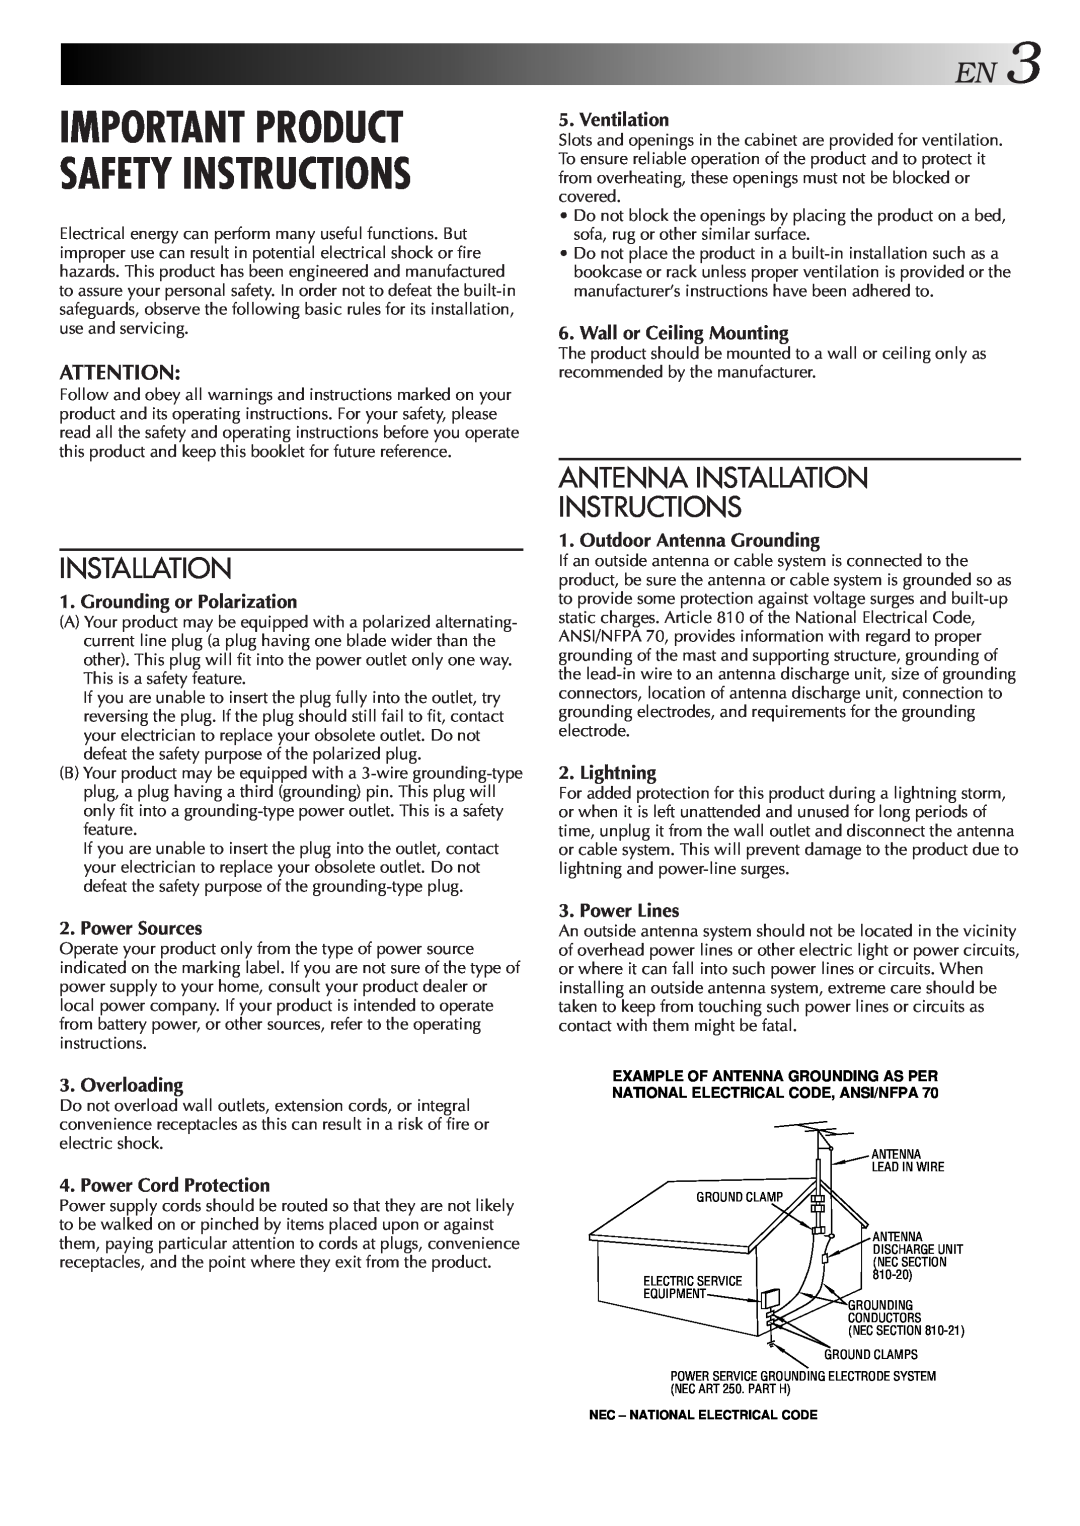 JVC SR-VS10U manual Important Product Safety Instructions, Antenna Installation Instructions 